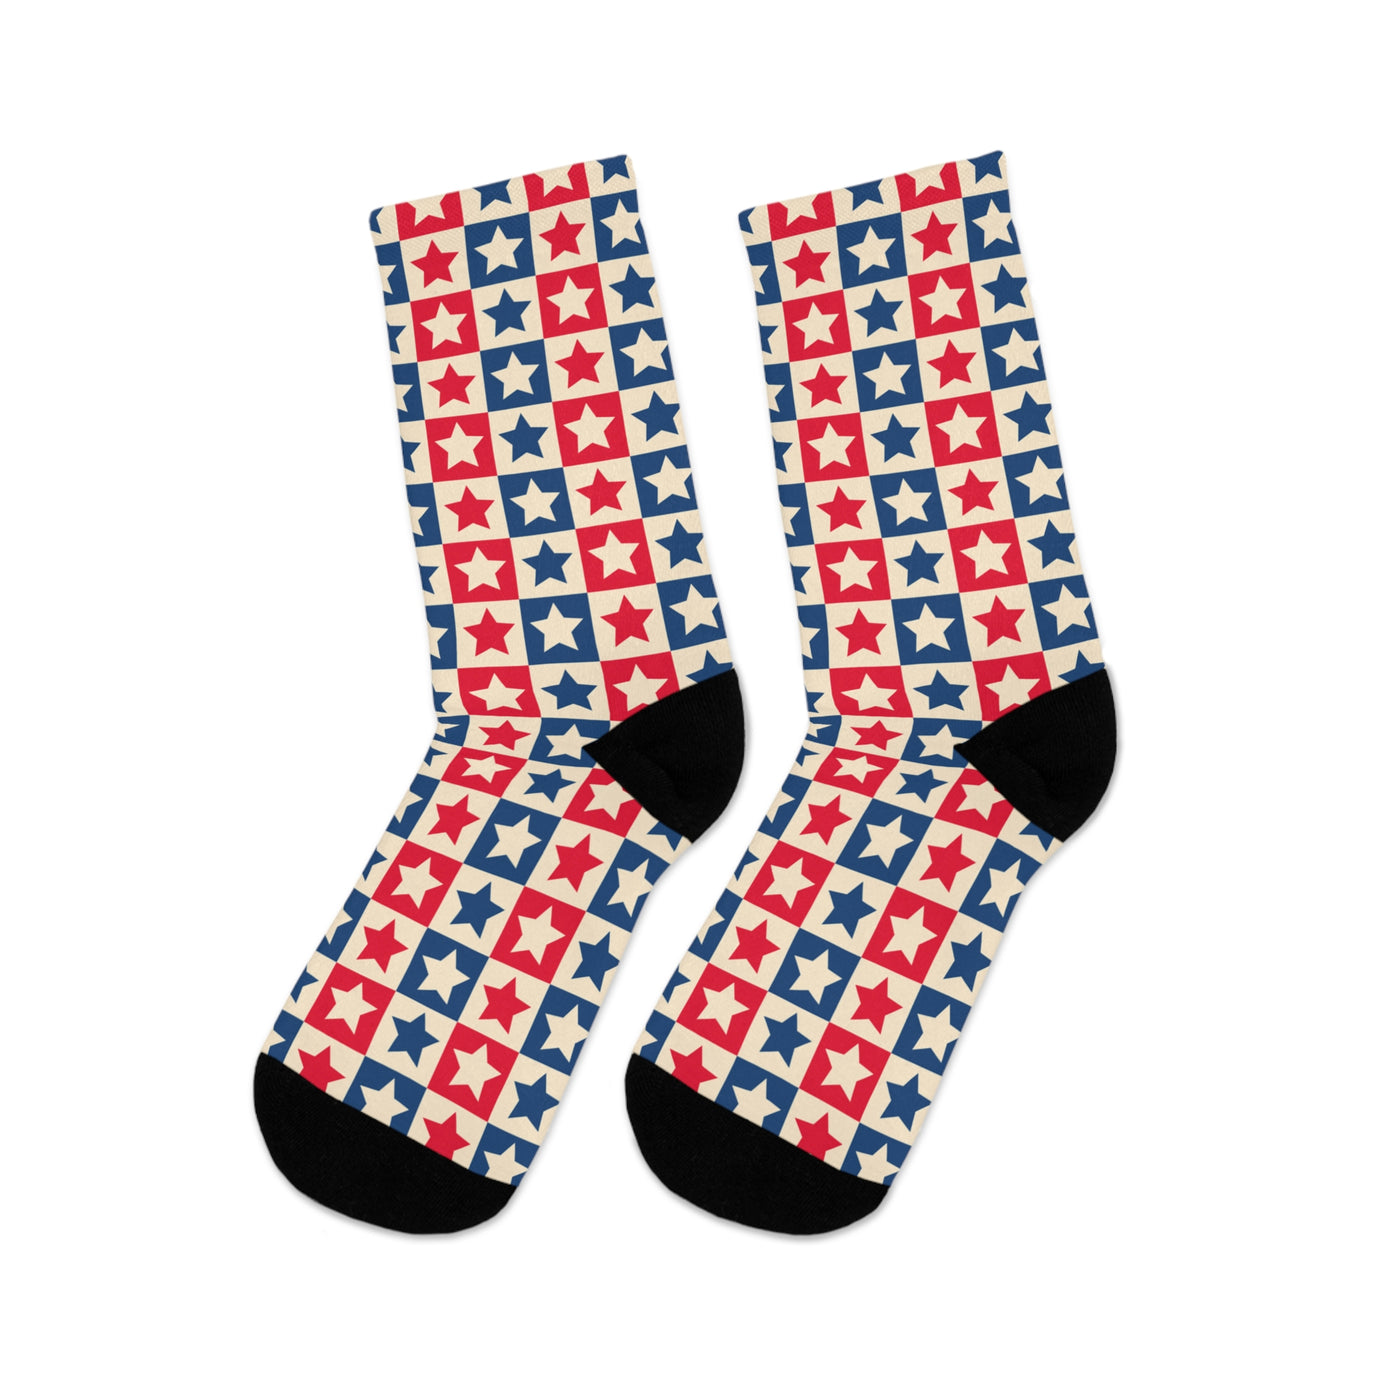 Stars of America Socks